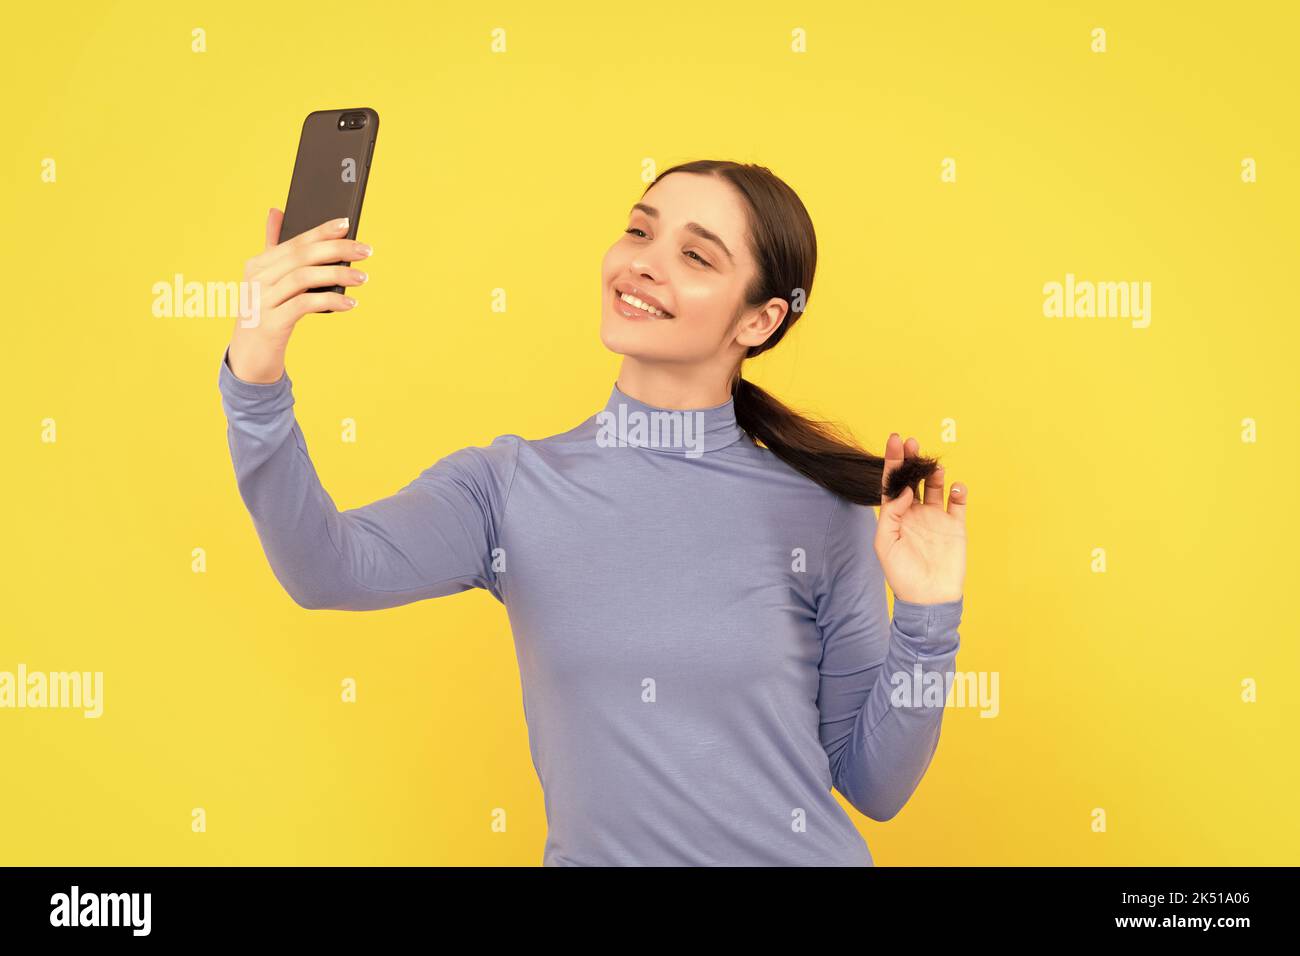 smiling woman making selfie photo on smartphone, selfie Stock Photo